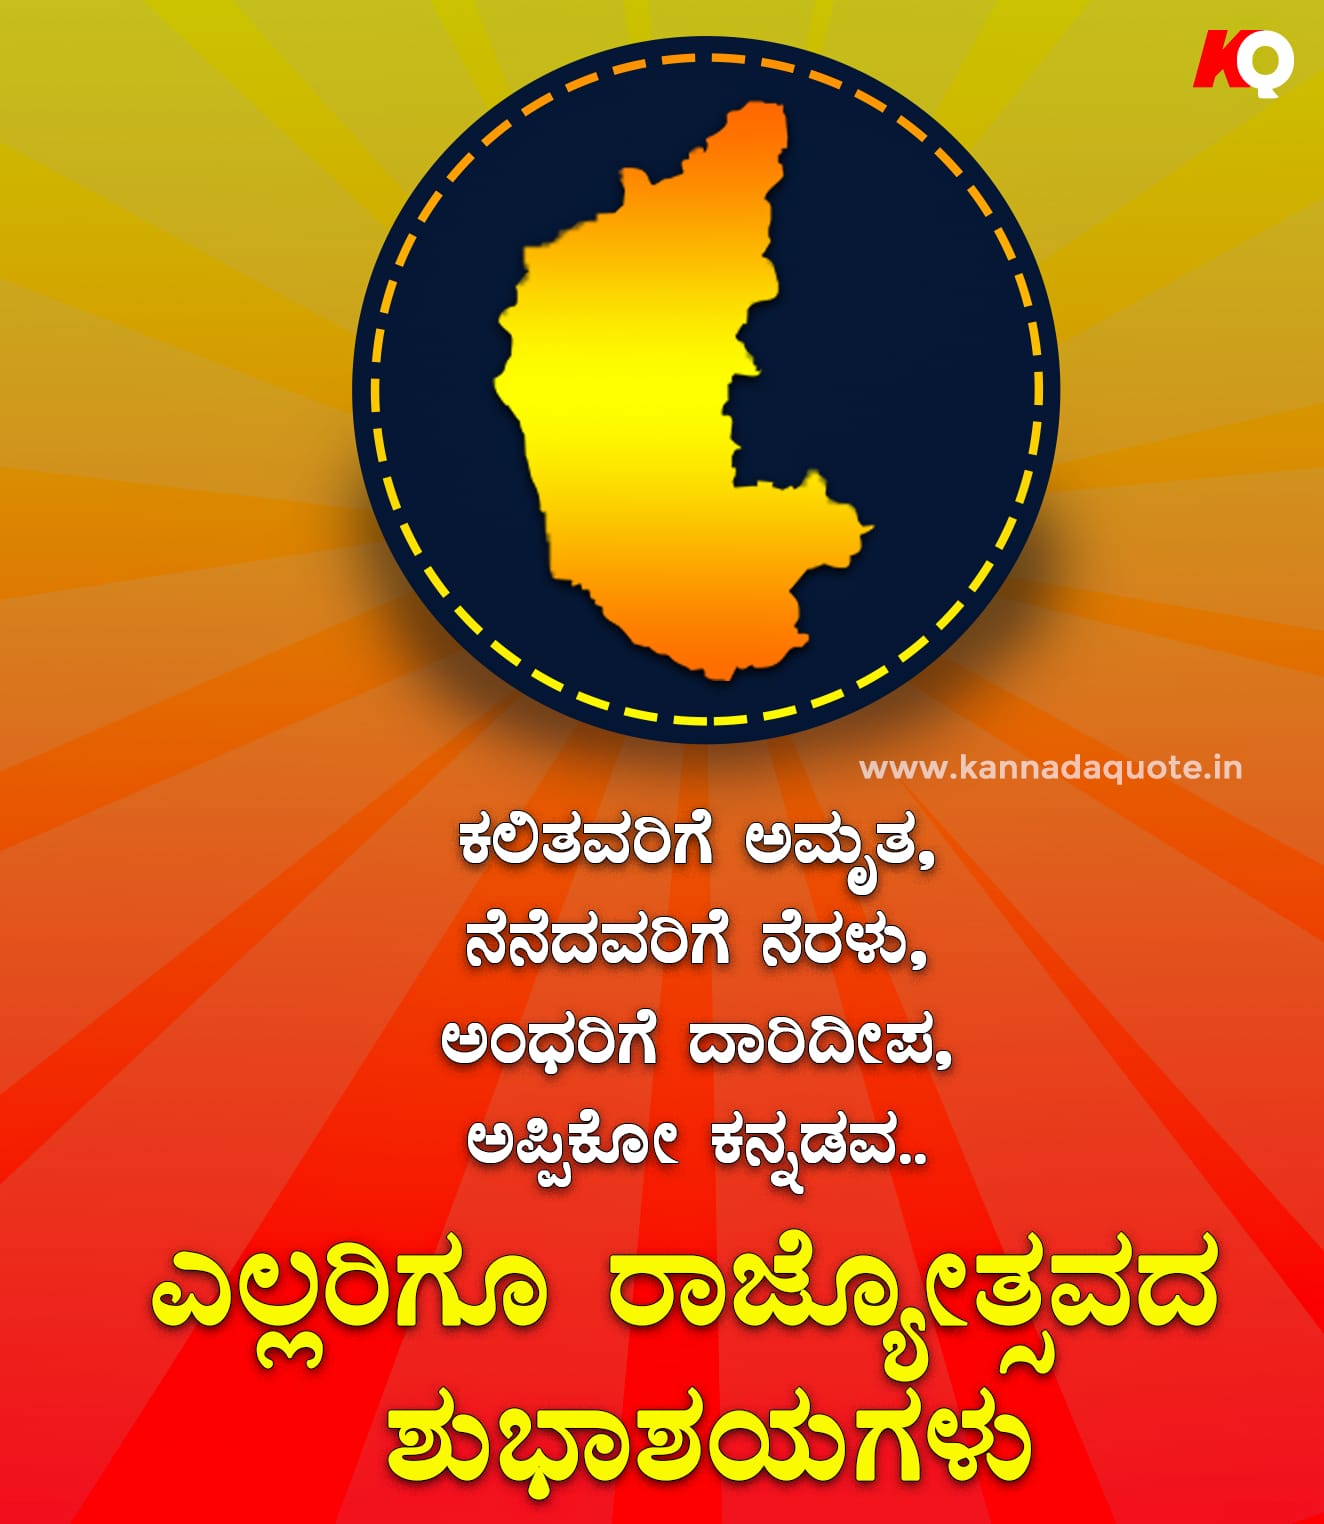 Quotes on Happy Kannada Rajyotsava in Kannada